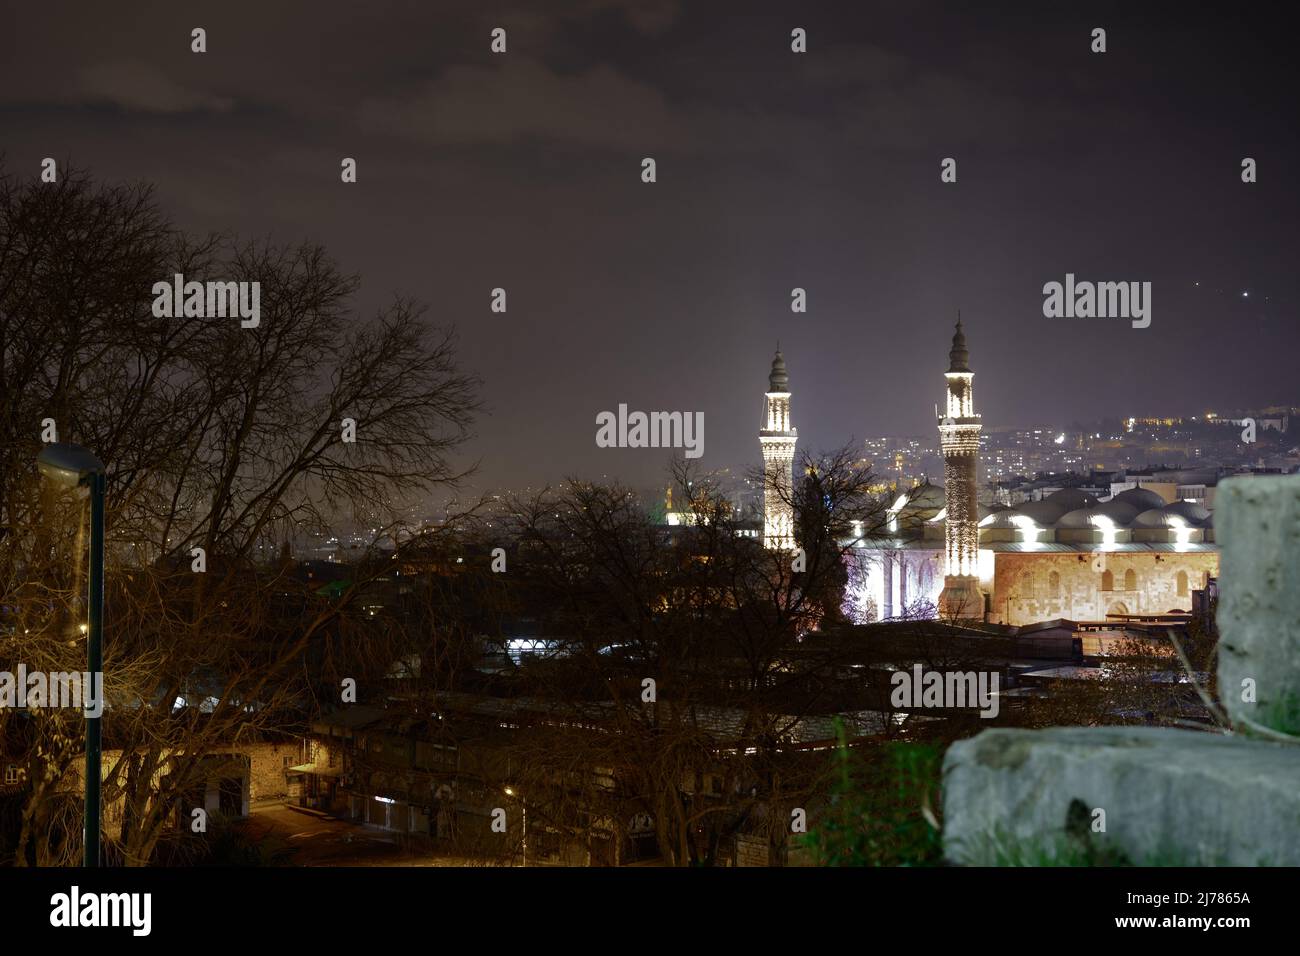 Grande moschea nella notte di Bursa, Bursa nome locale è antica moschea ottomana è Ulu Cami alla sera e illuminazione Foto Stock